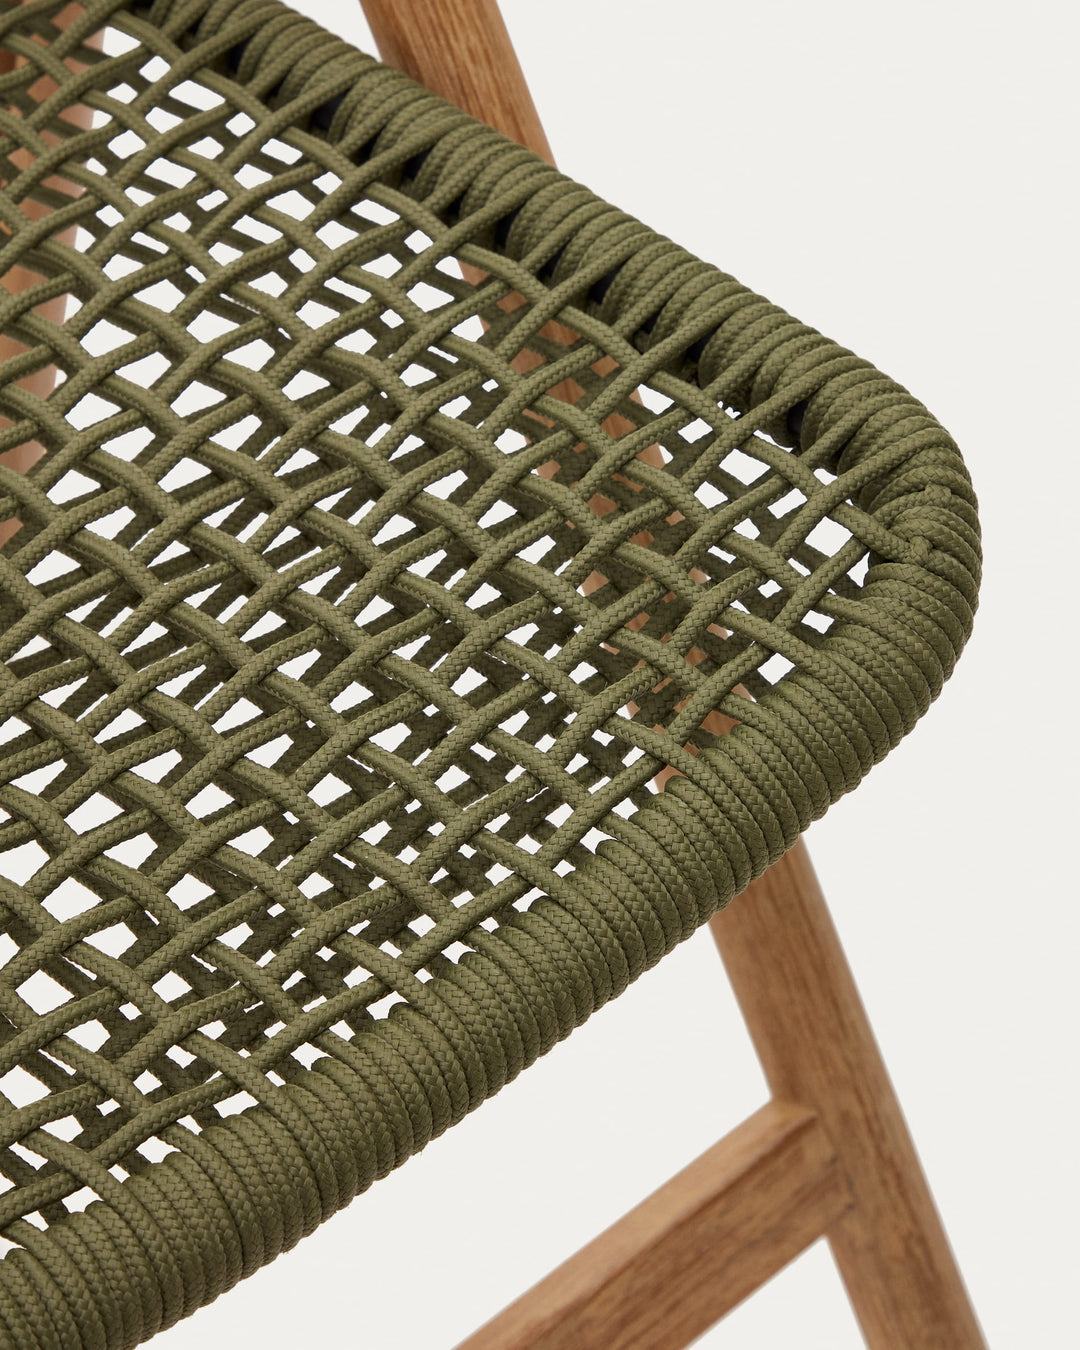 Dandara Folding Chair-Beaumonde